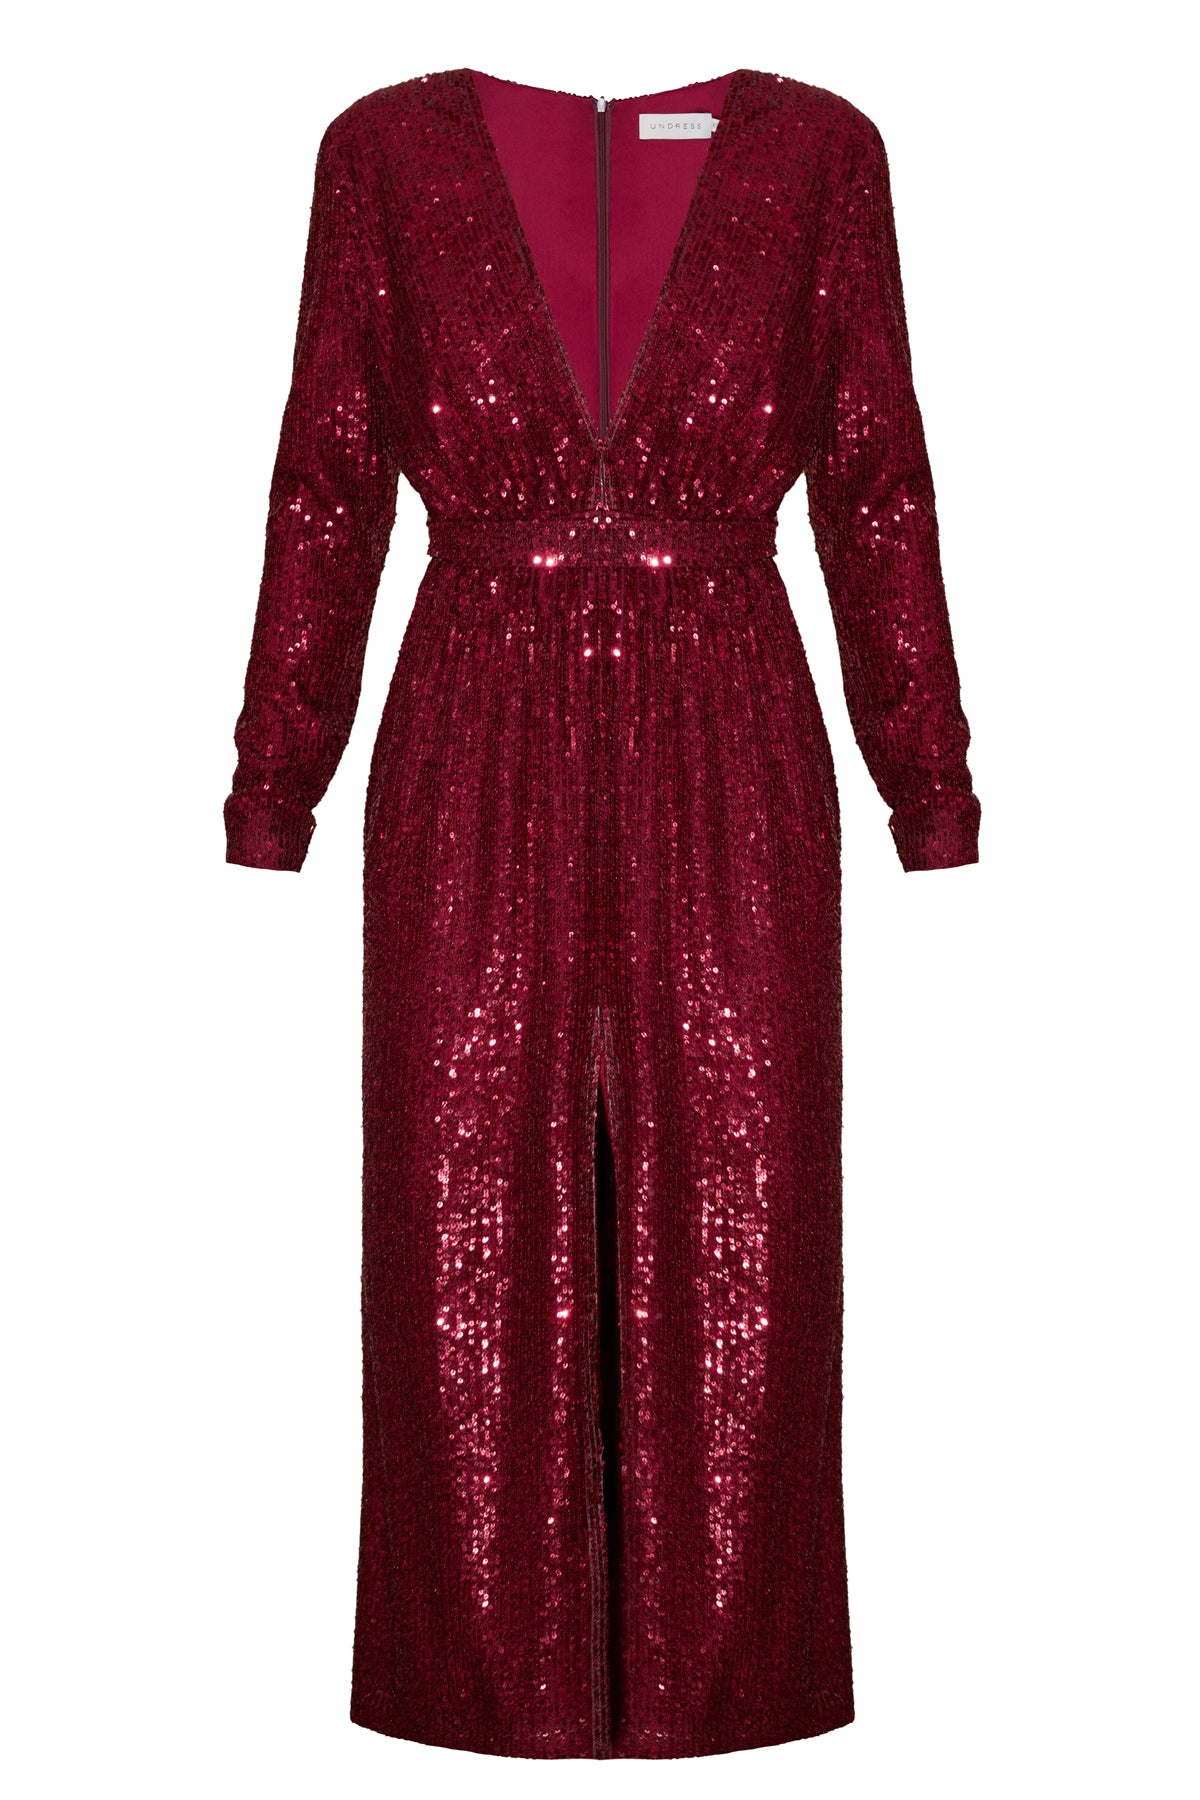 CLARA Red Wine Sequin Deep V Neck Midi Dress – UNDRESS